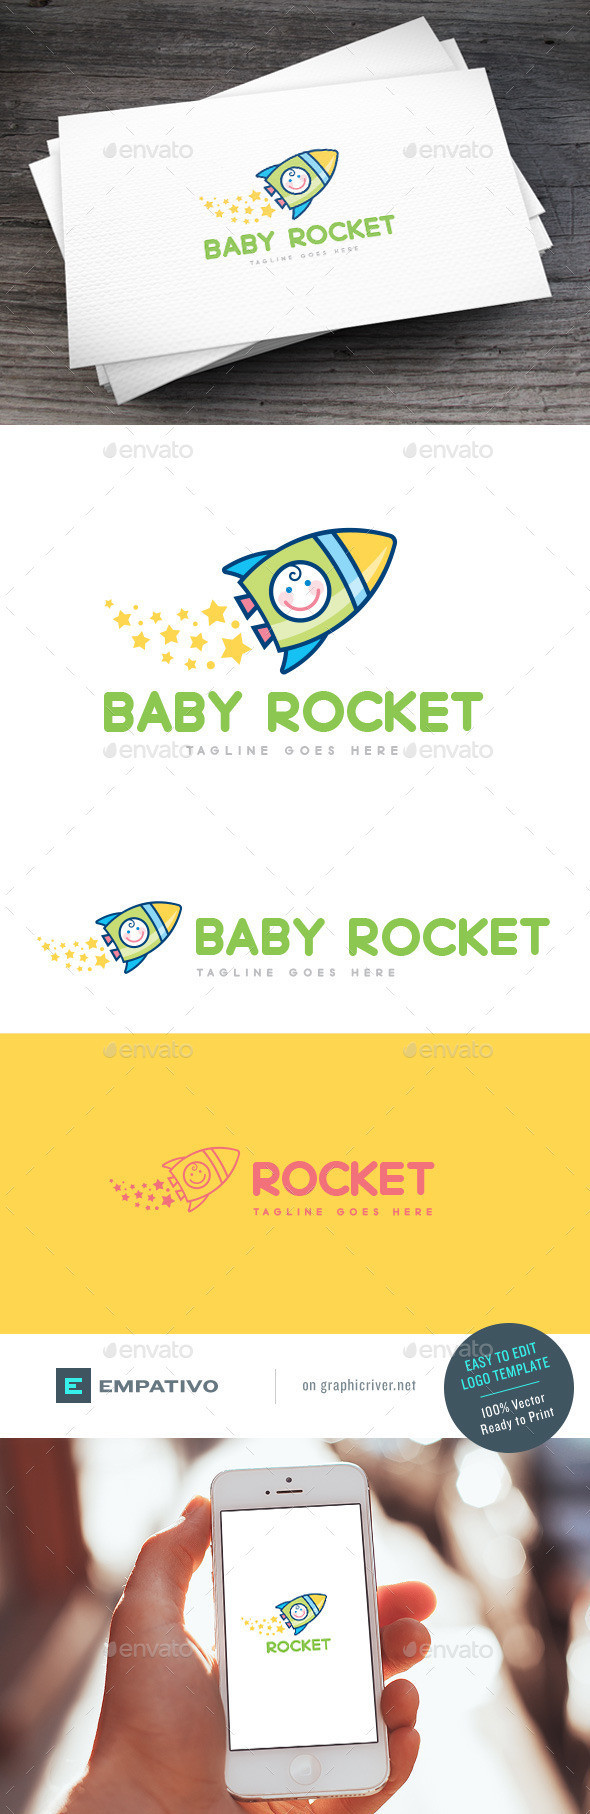 Baby rocket logo template